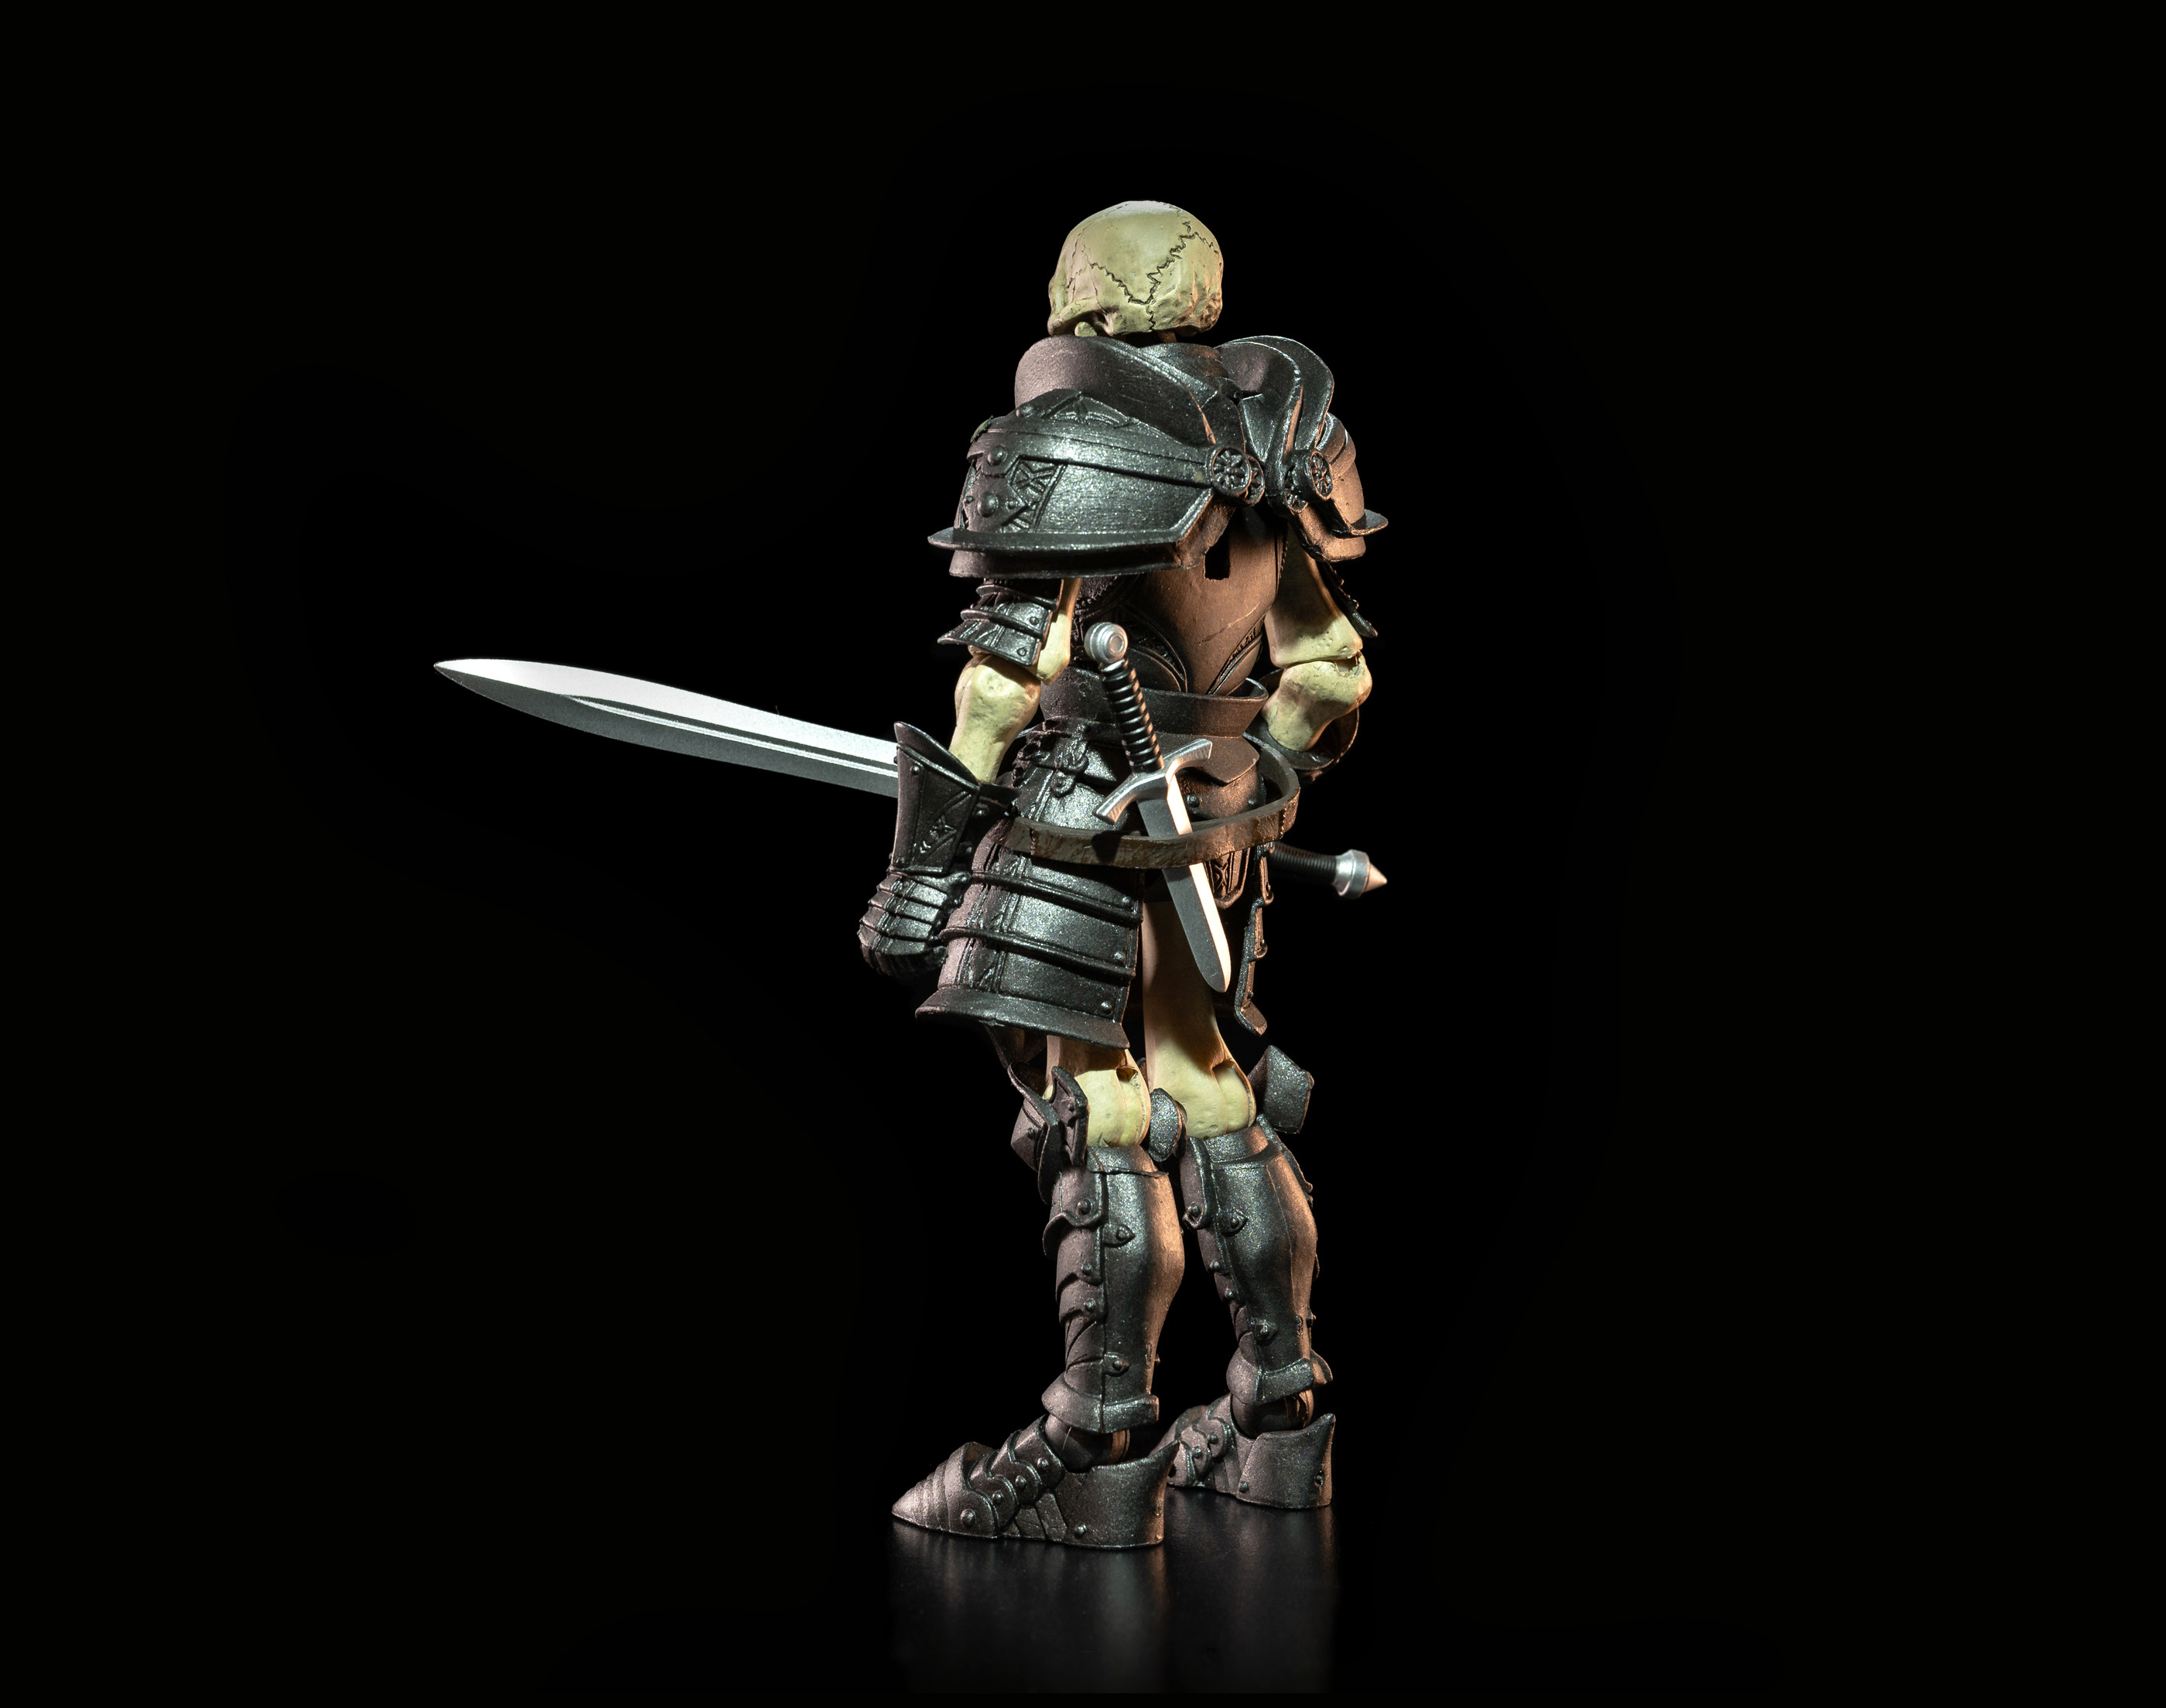 Skeleton - Mythic Legions action figure from Four Horsemen Studios